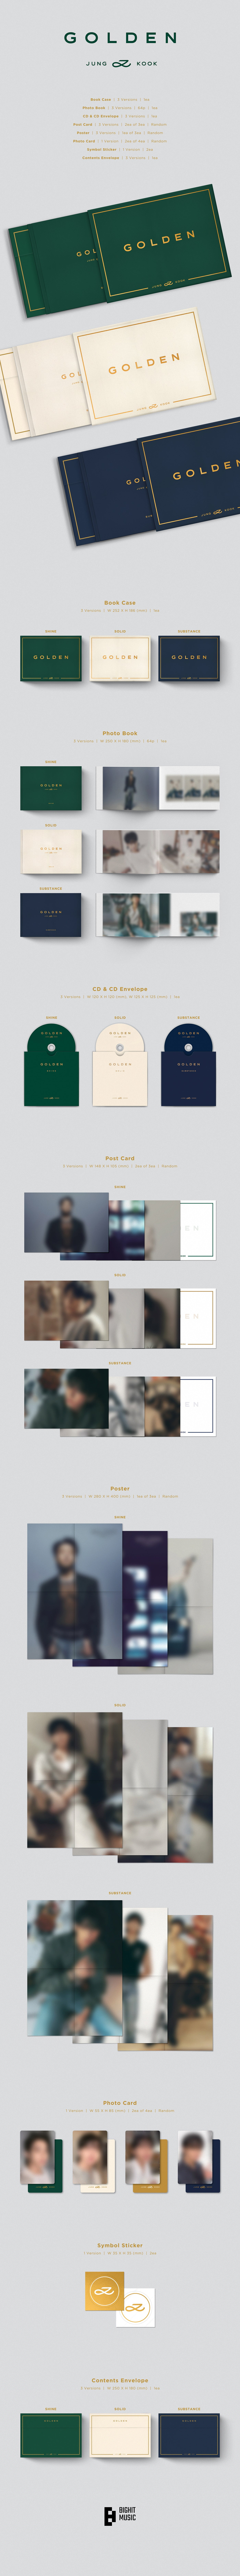 BTS - Jung Kook - 1st Solo Album 'GOLDEN' + Soundwave POB Coaster